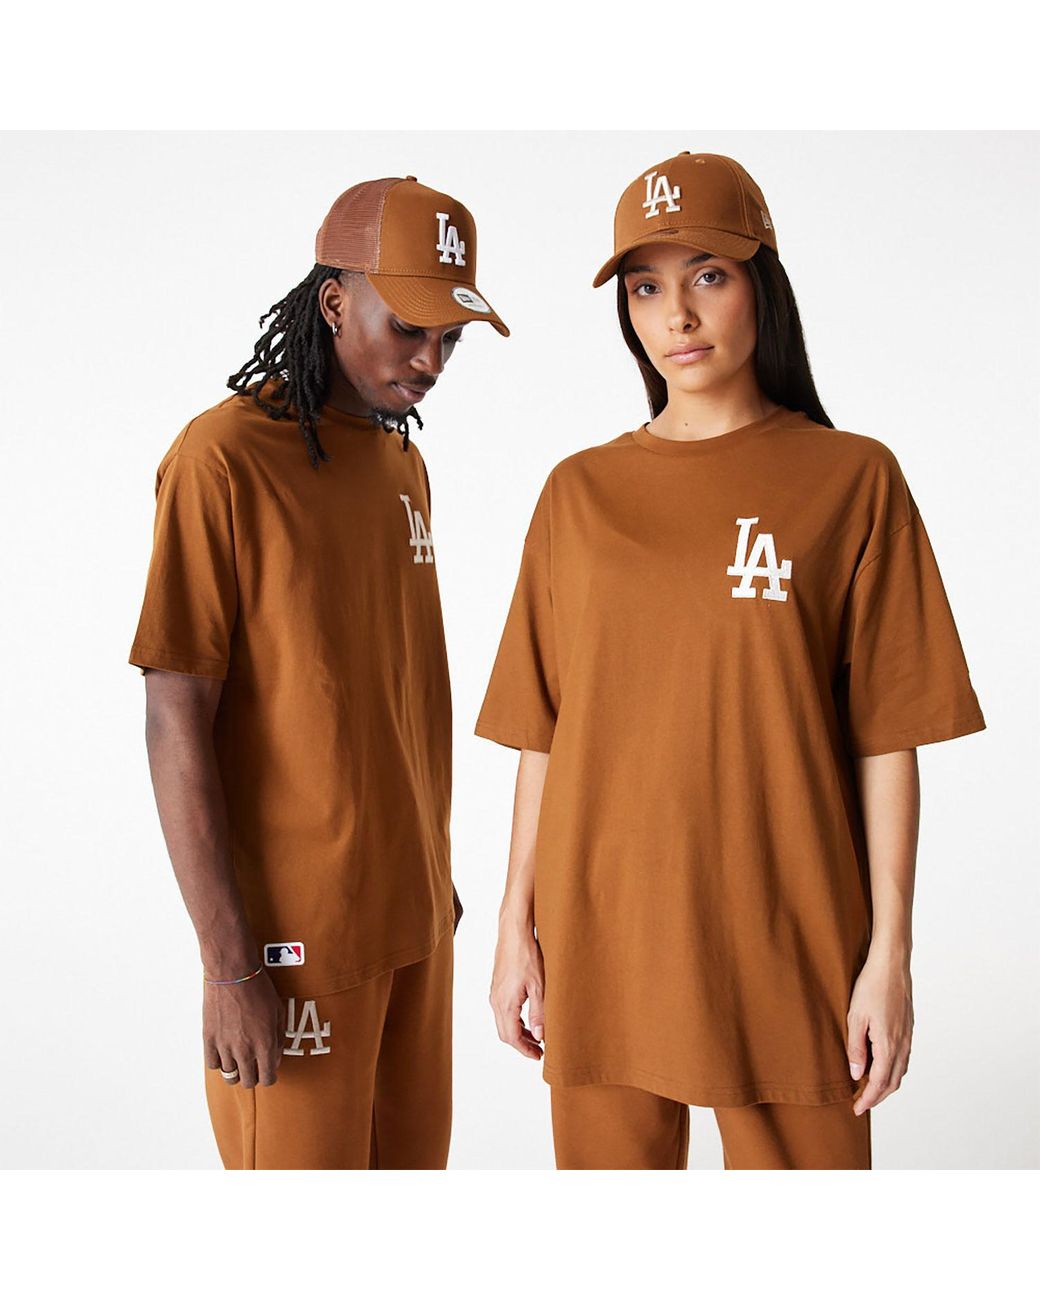 MLB DODGERS Tshirt / Large / Dodgers Baseball Shirt -  New Zealand